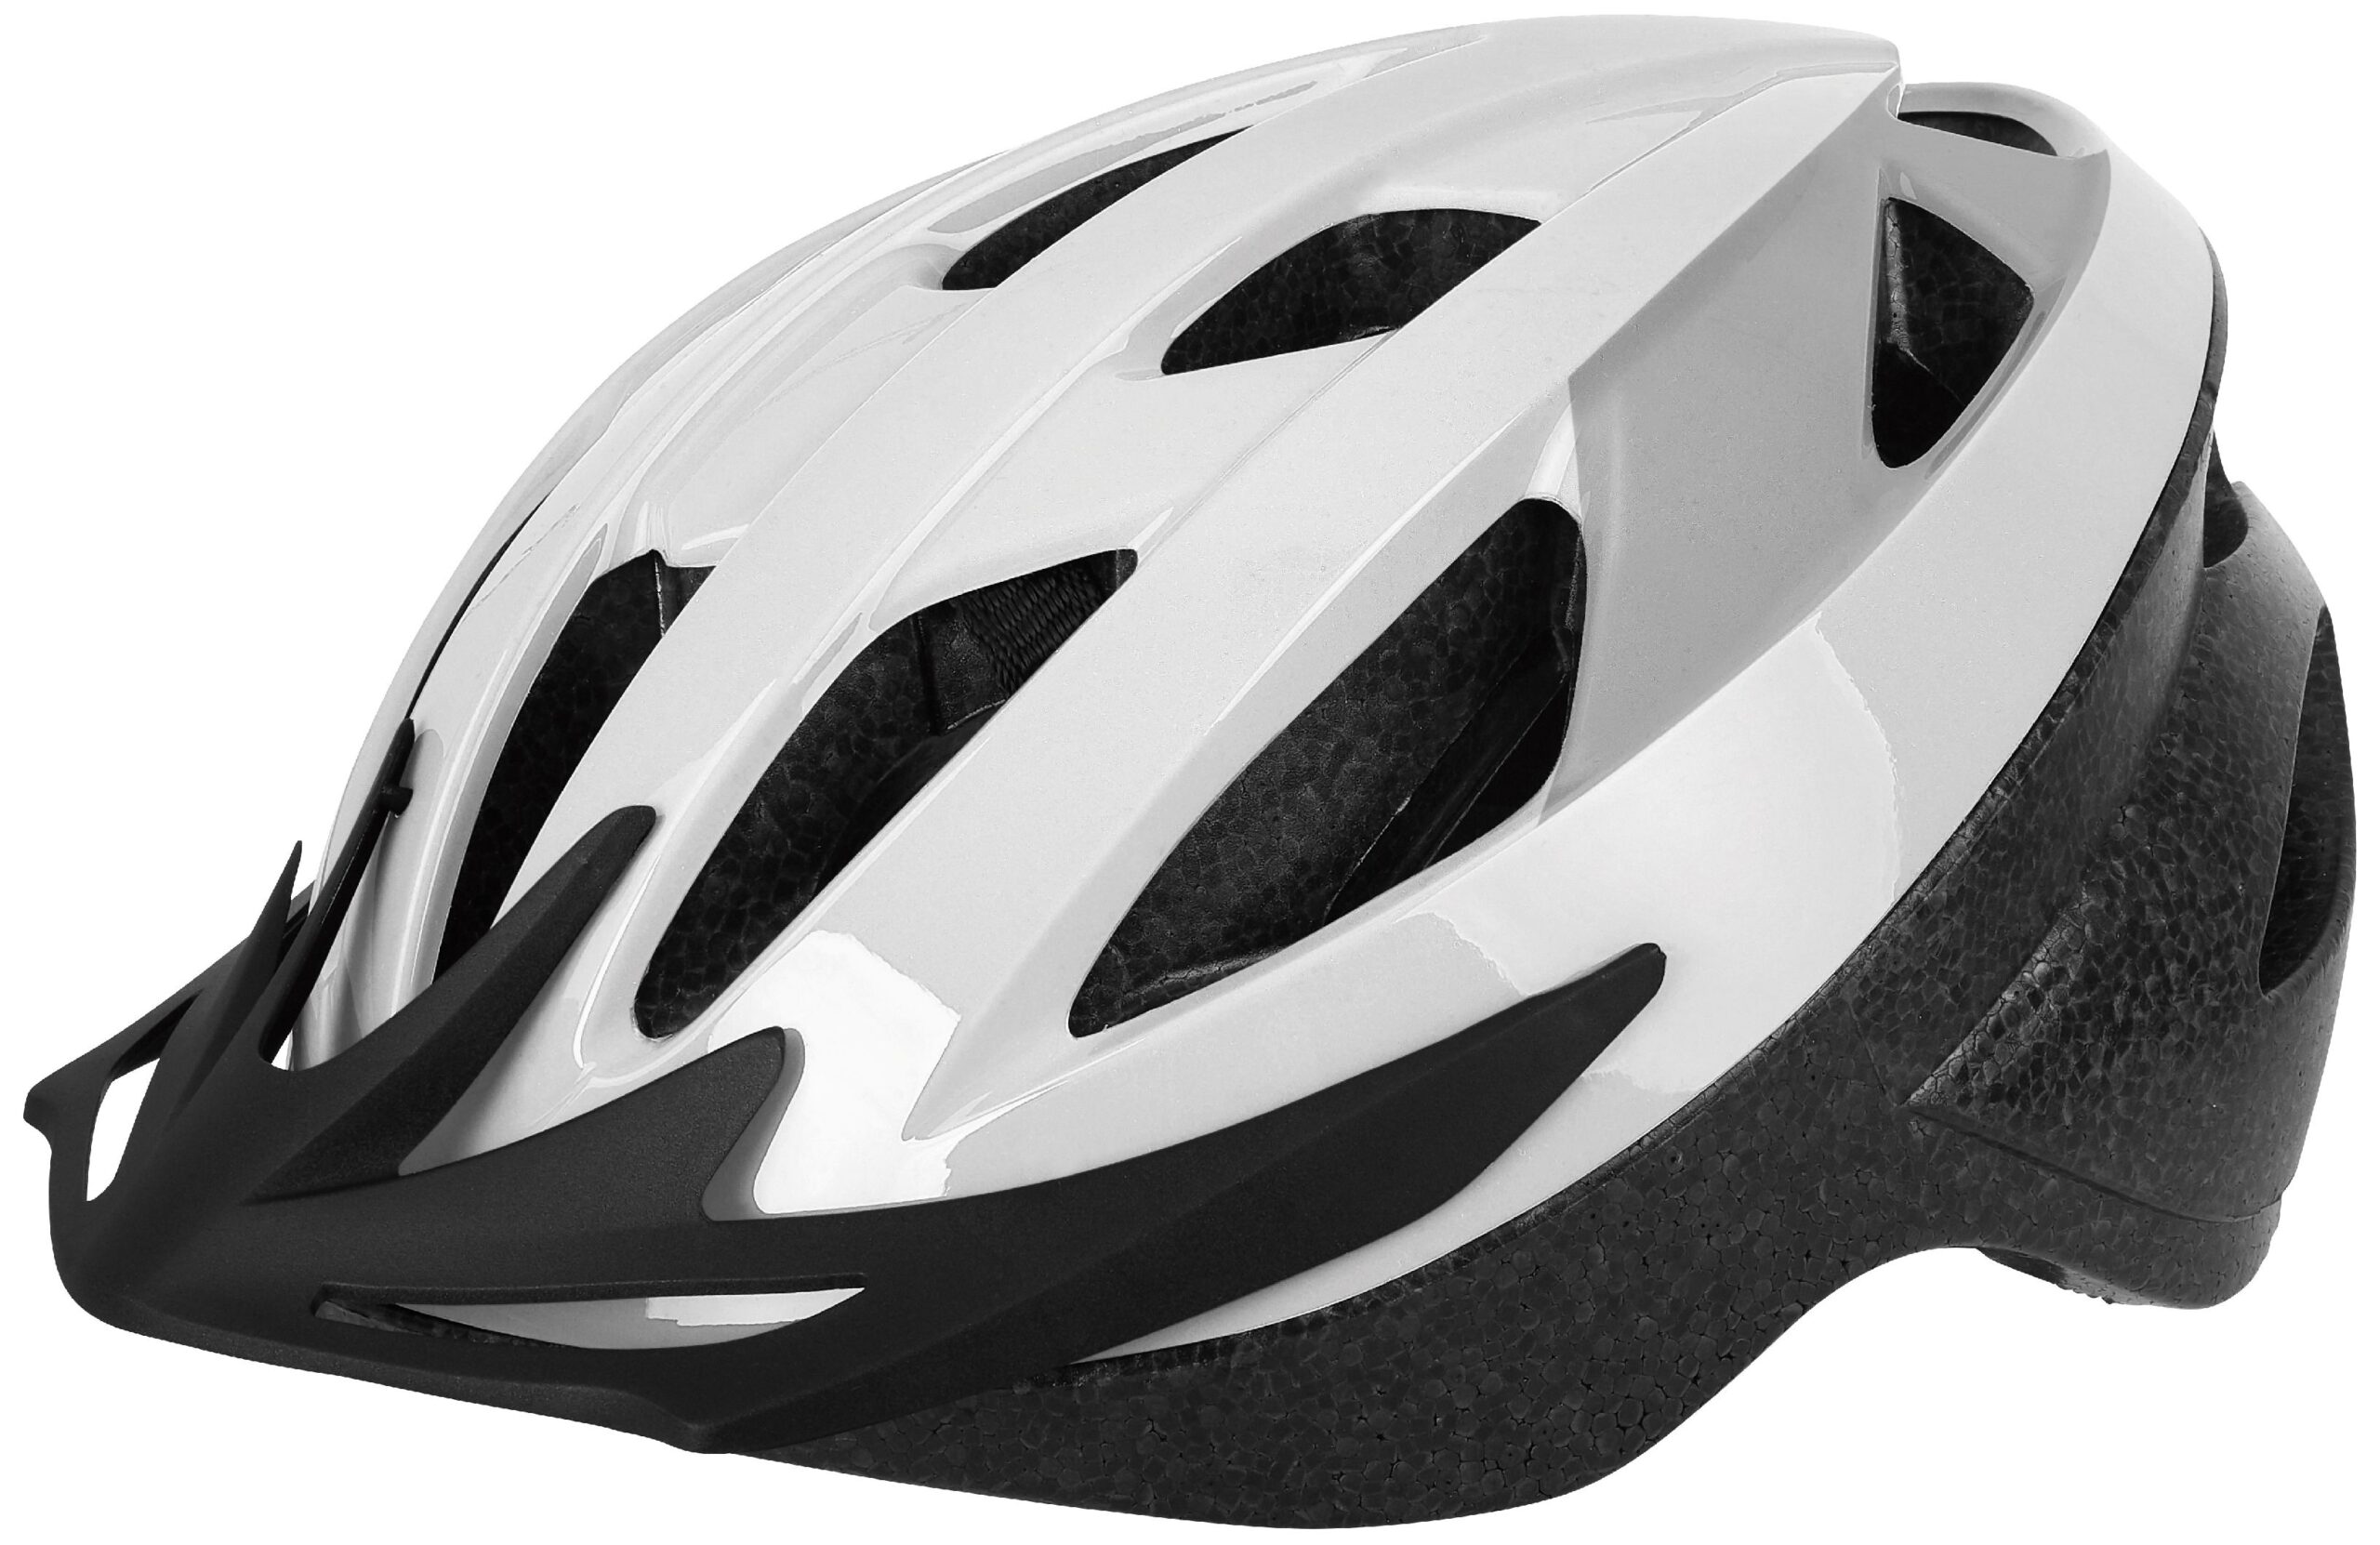 HN01WGL Oxford White/Grey Large 58-62cm Oxford Neat Helmet